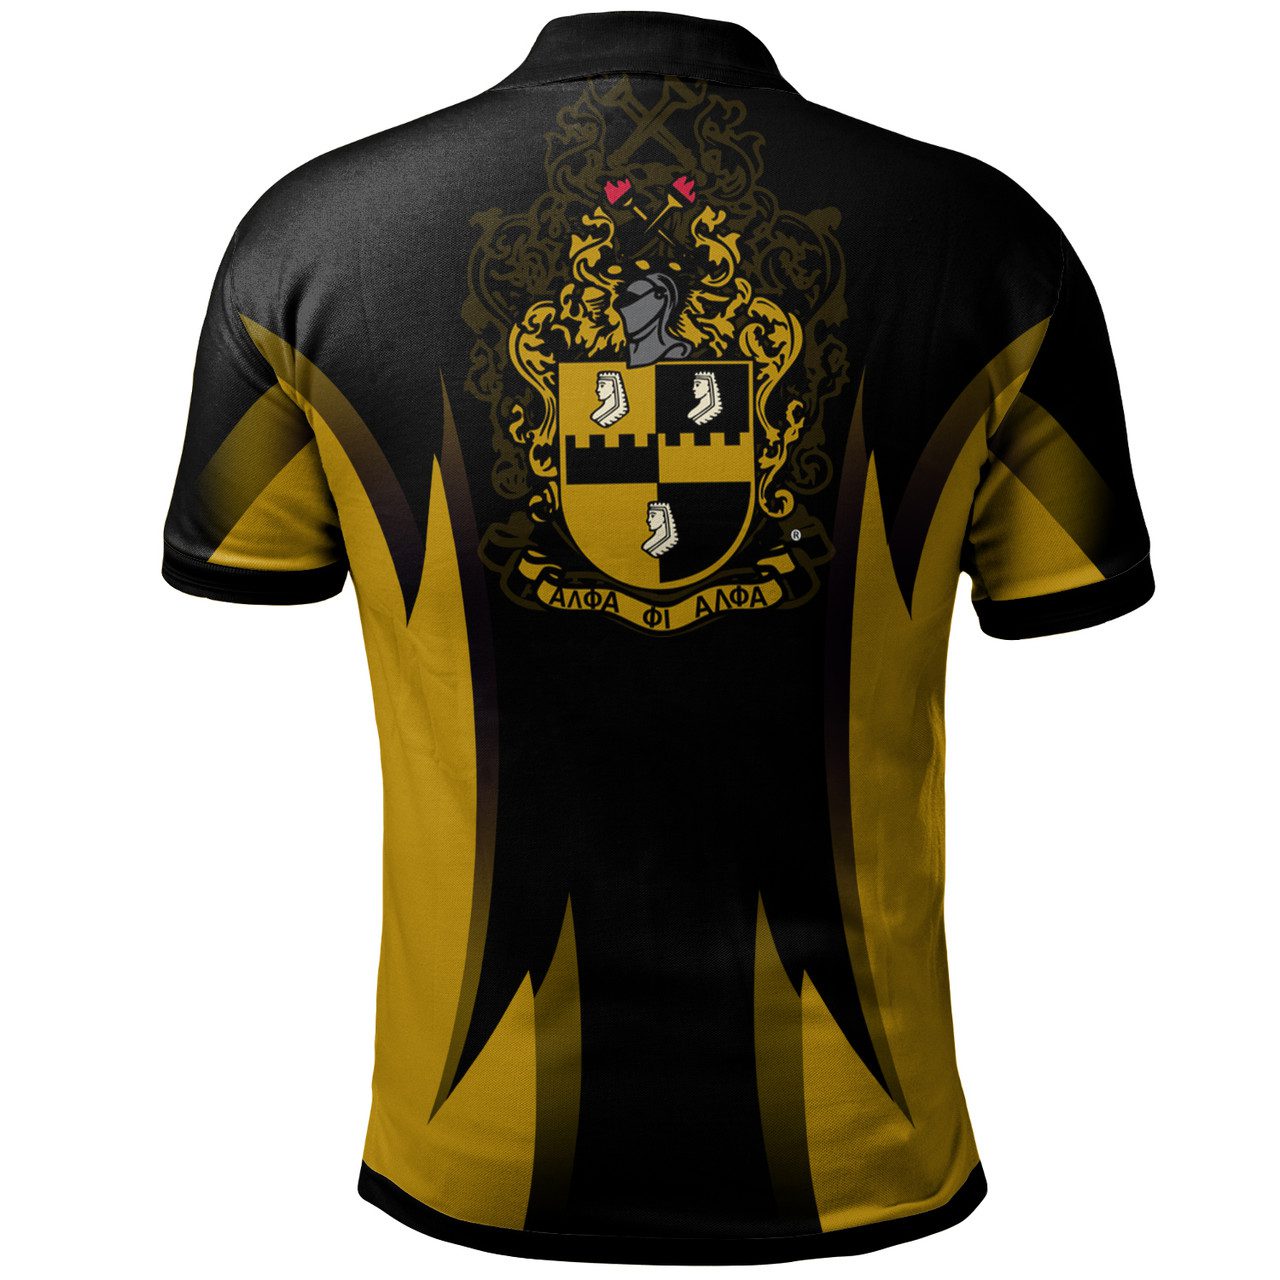 Alpha Phi Alpha Polo Shirt – Fraternity Limited Version Polo Shirt